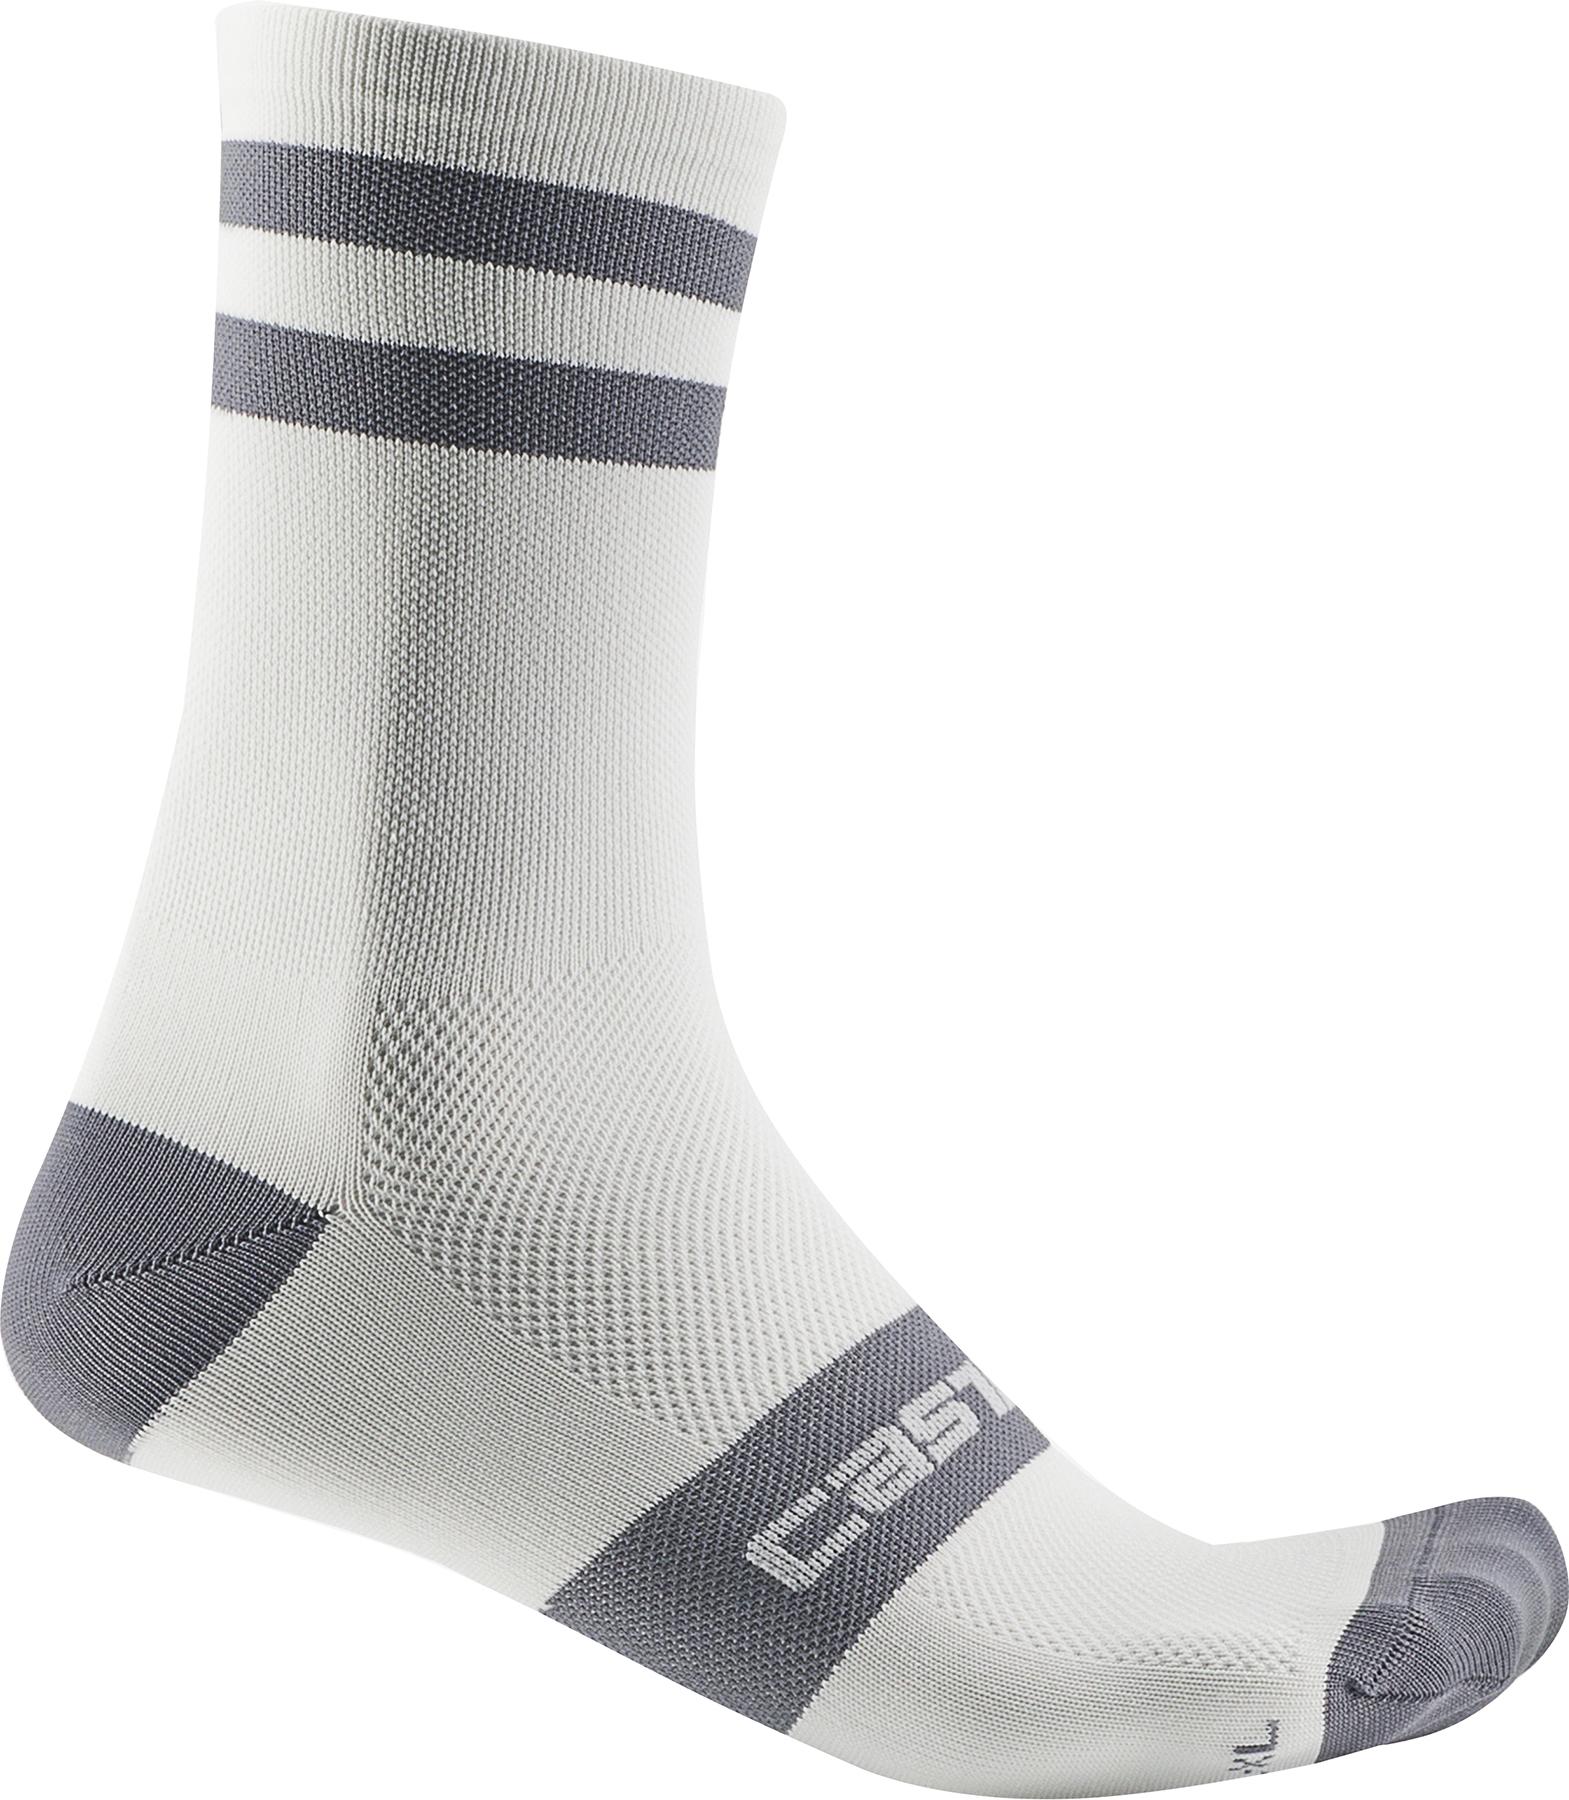 Castelli Velocissimo Kit Socks  White/grey